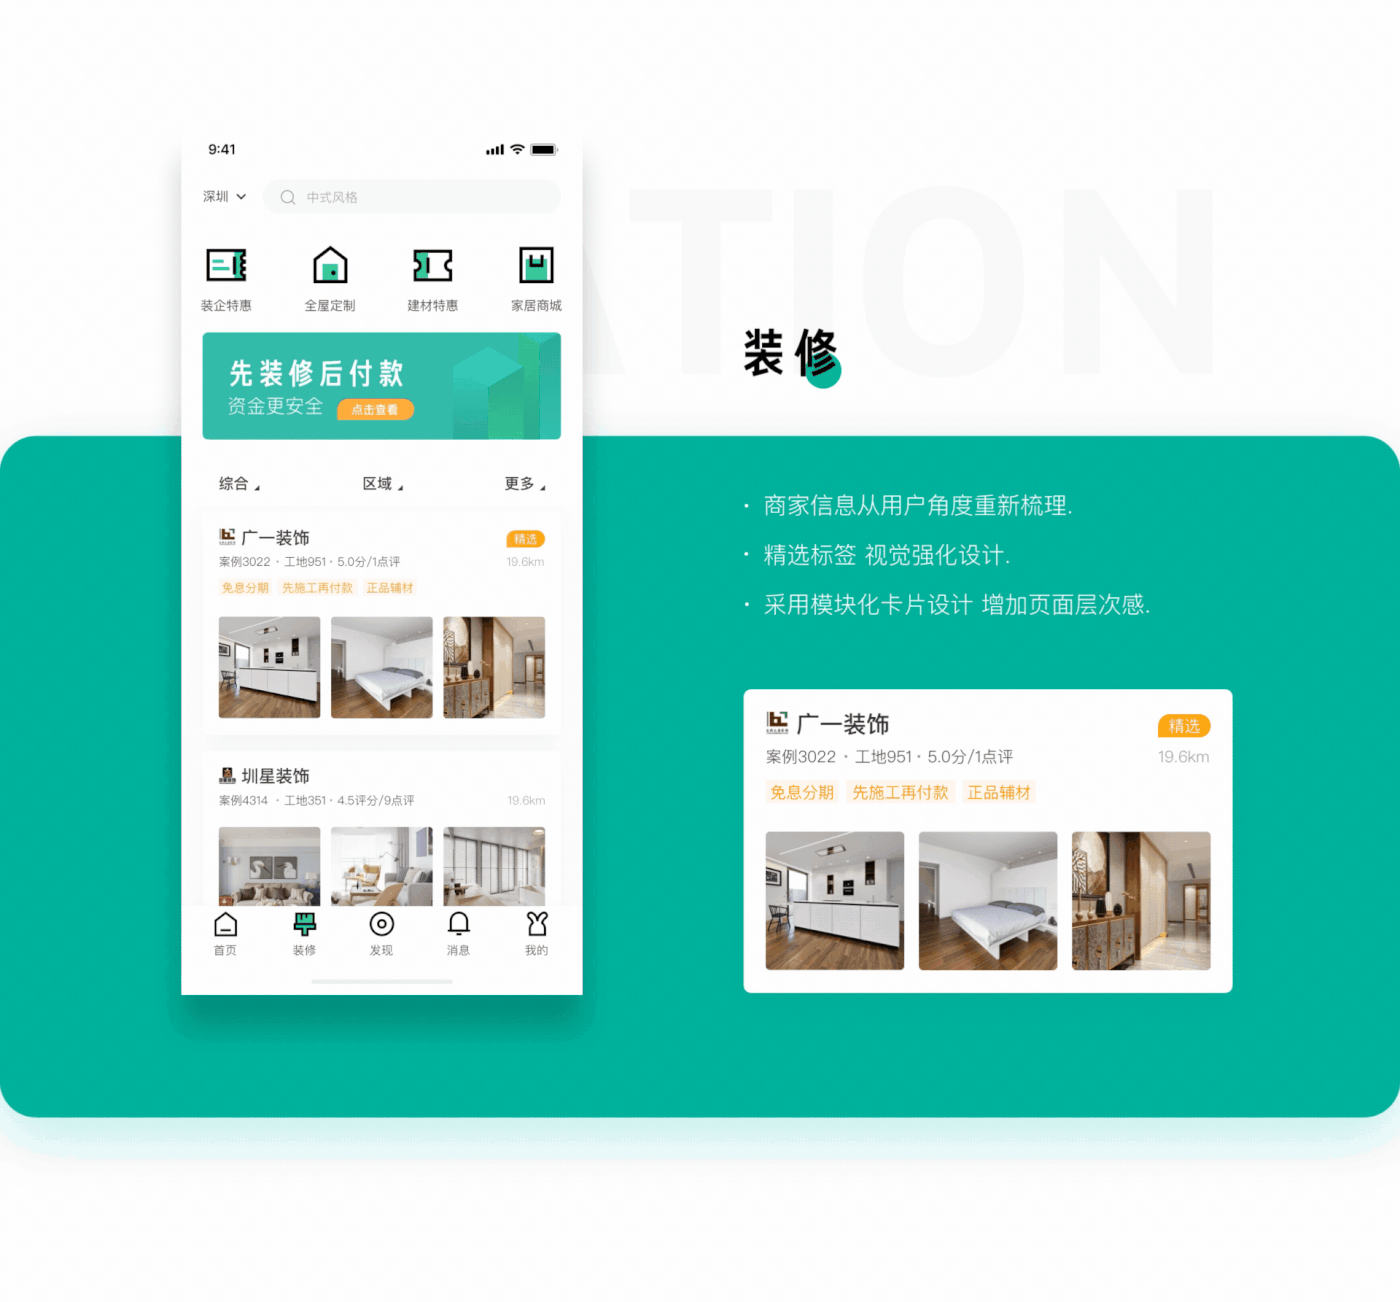 UI ux app Website redesign Mobile application Interface Soft dress Software Interface home interior design 